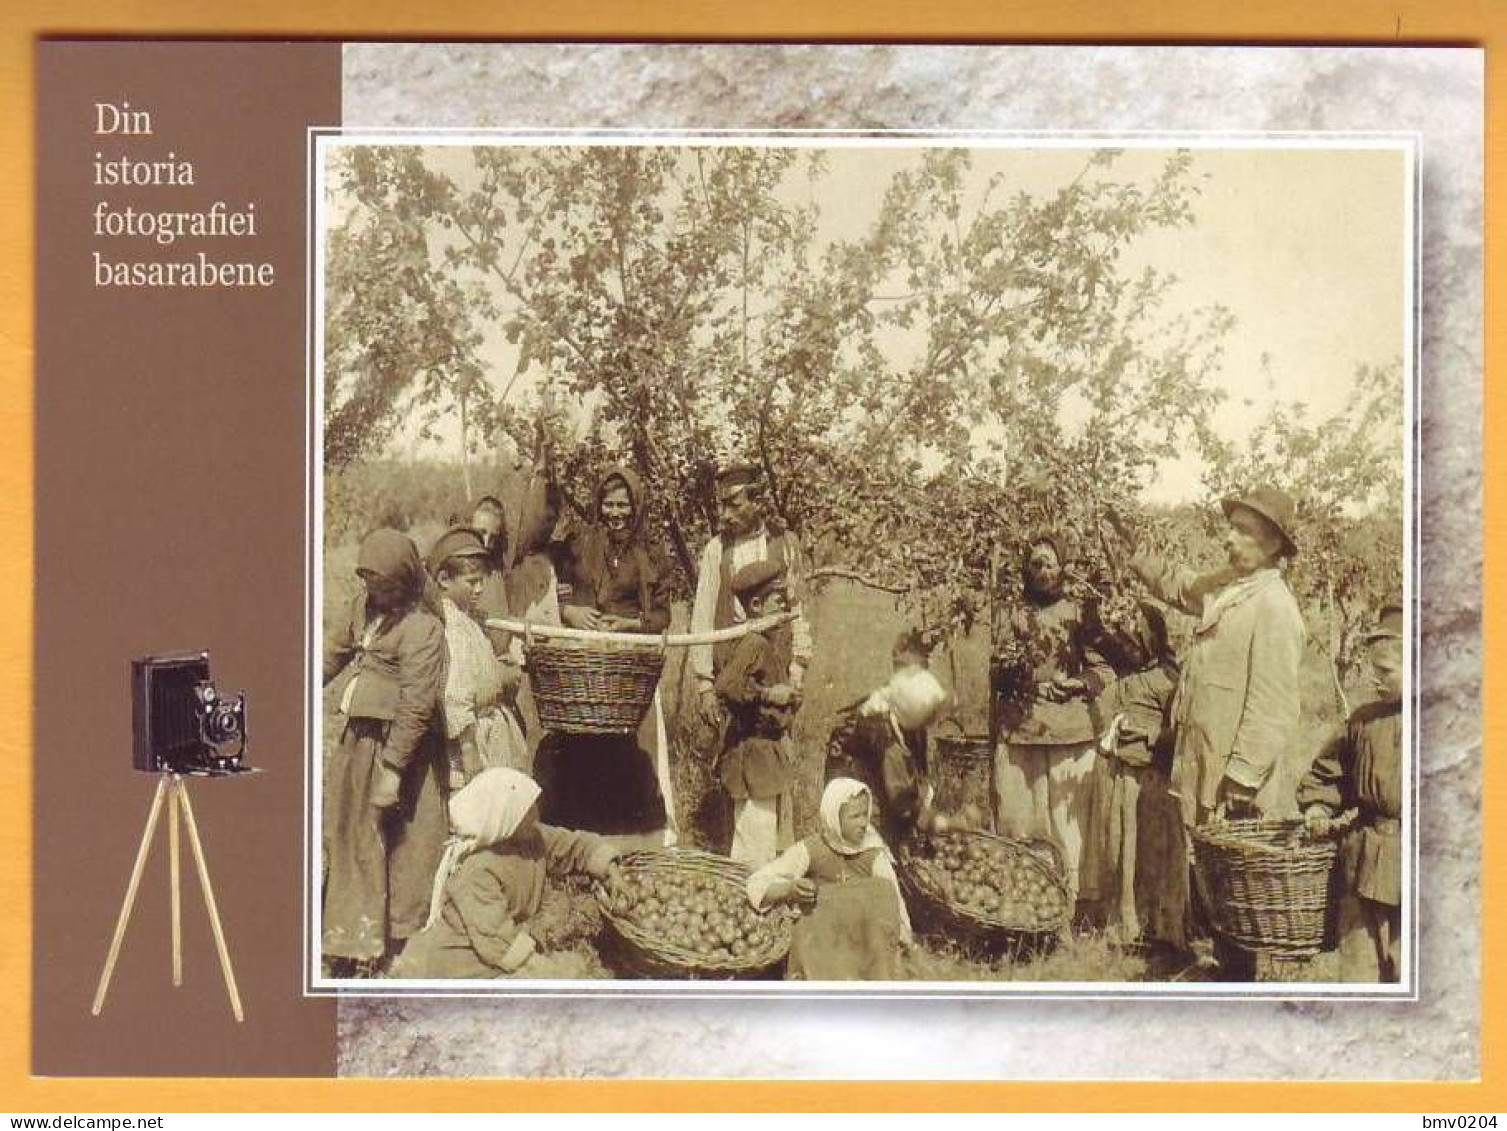 2014 Moldova  Postcard. Fruit Collection. The Village Of Speia. Basarabia. Osterman. The Museum. Apples. - Moldavie